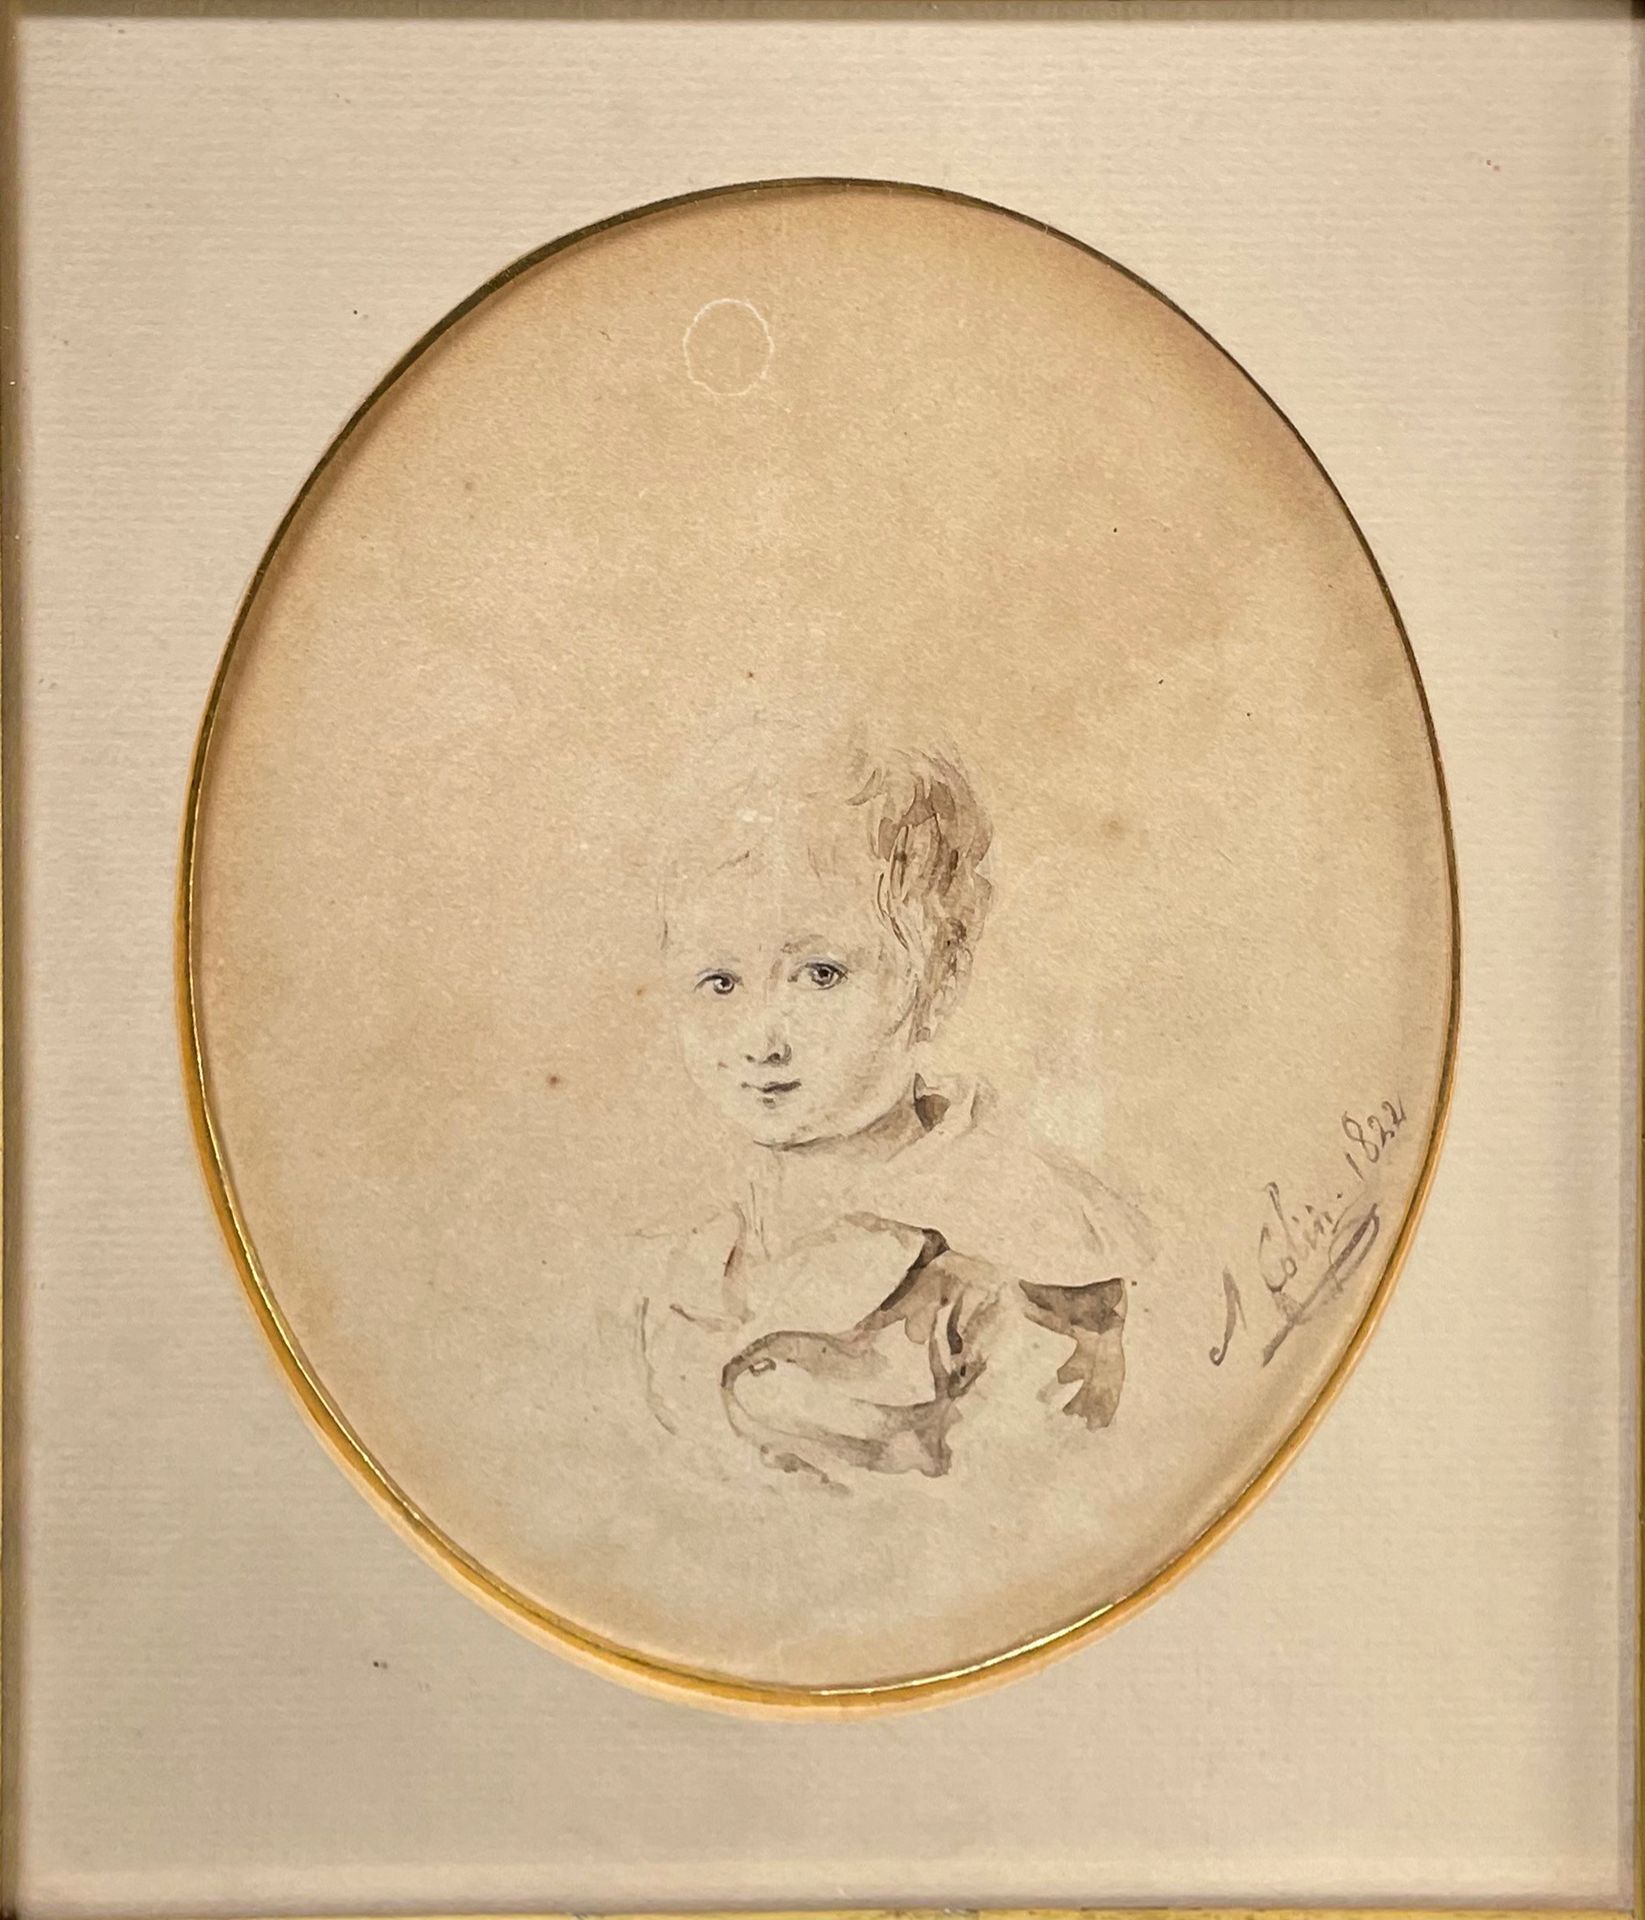 A. COLIN, 一个孩子的画像

铅笔和水墨

右下方有签名和日期1822年

15 x 13 cm (正在观看)

湿润度

附上一幅署名Le Princ&hellip;